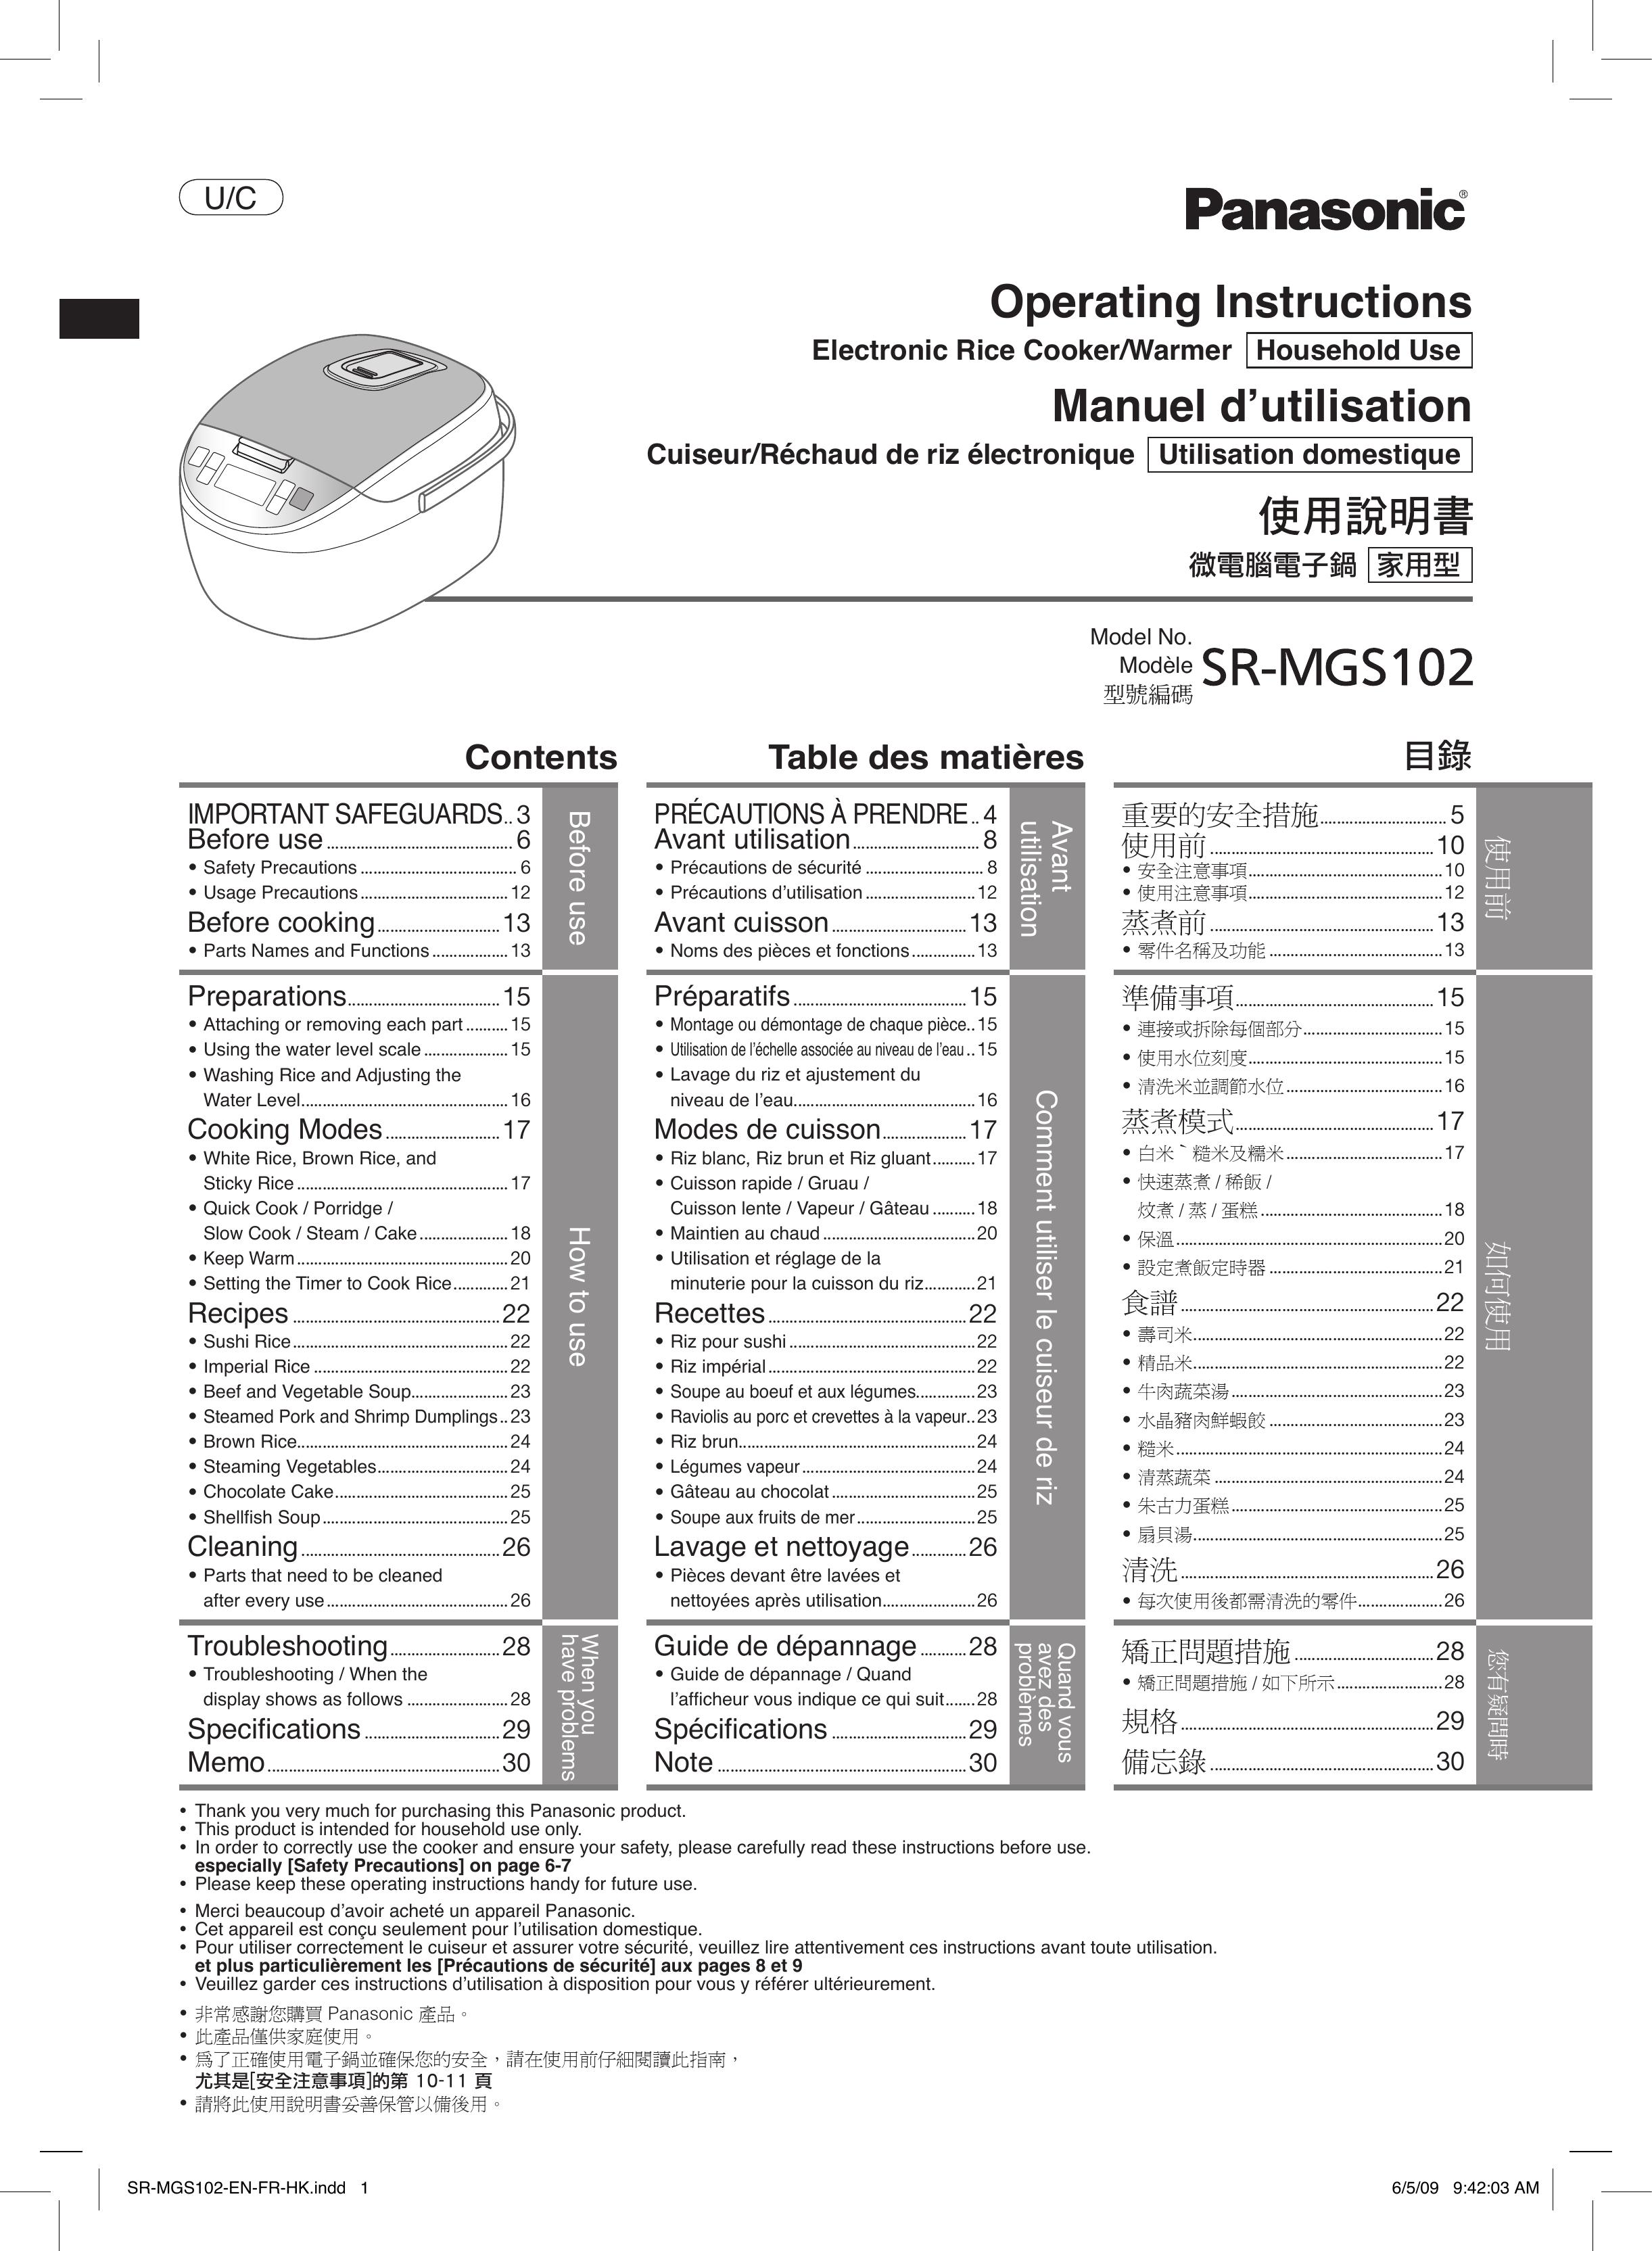 Panasonic SR-MGS102 Rice Cooker User Manual